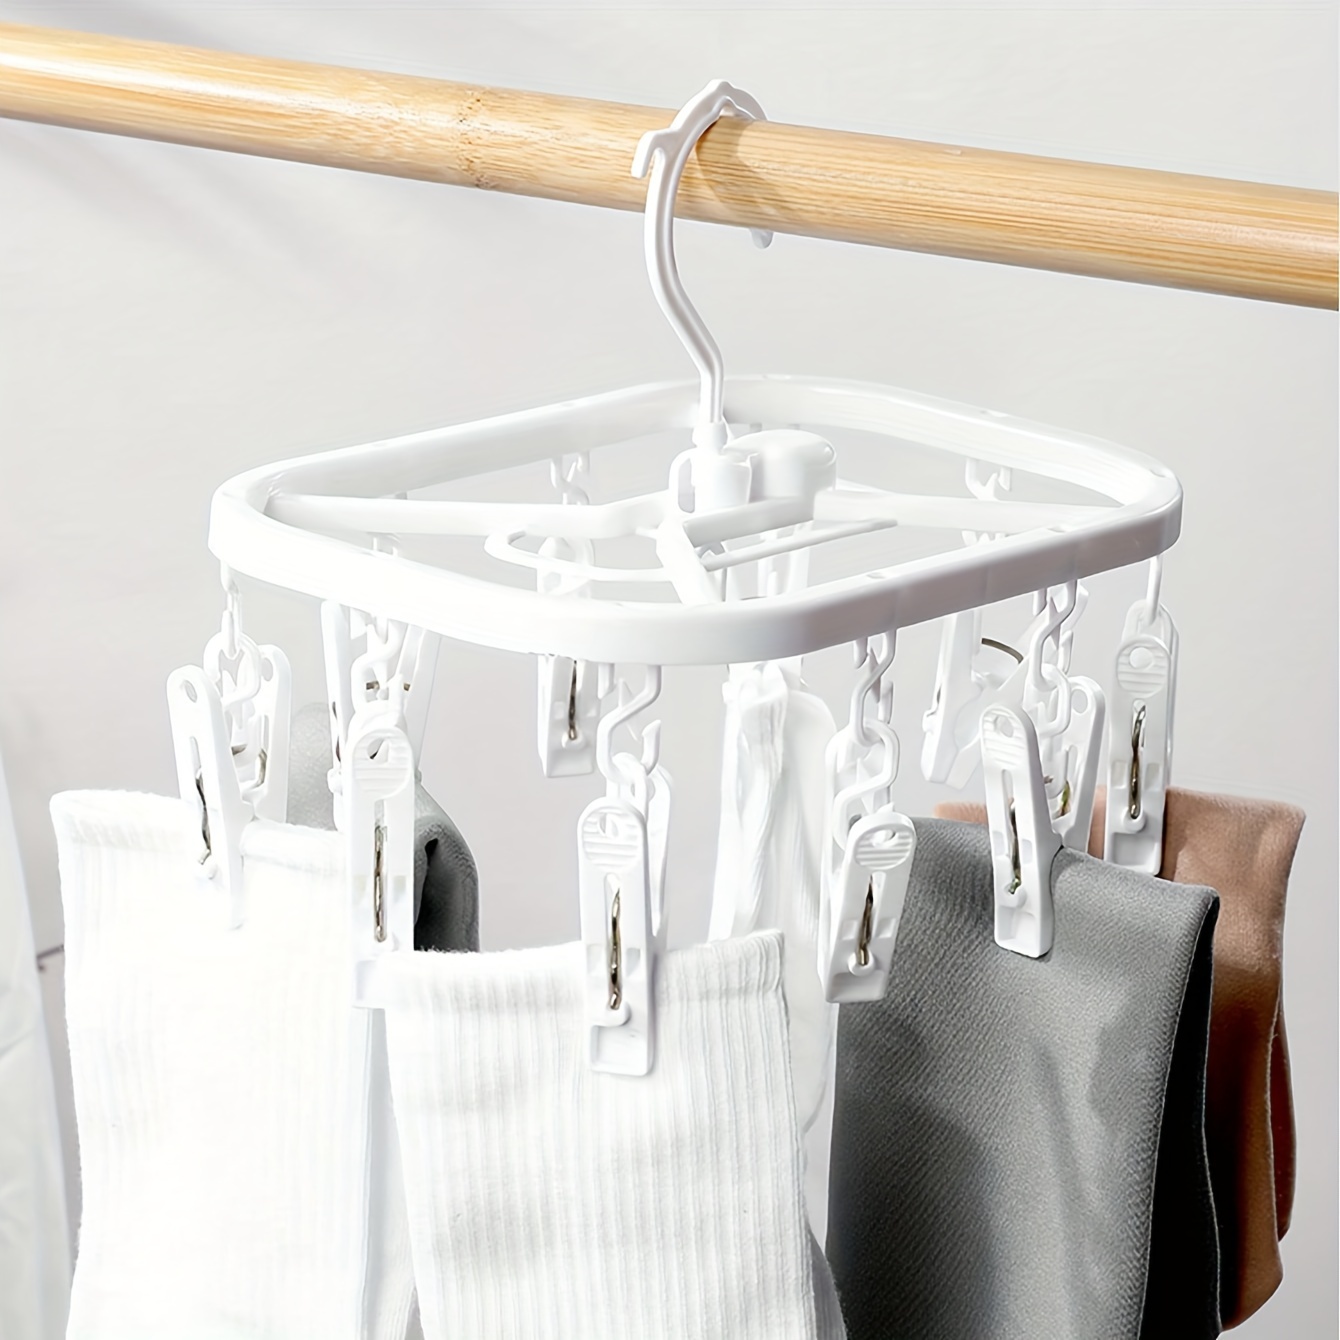 Calze asciugatura corda deposito lavanderia divisore organizzatore  risparmio asciugatura stendibiancheria corda lavatrice asciugatura calze  linea strumento lavanderia